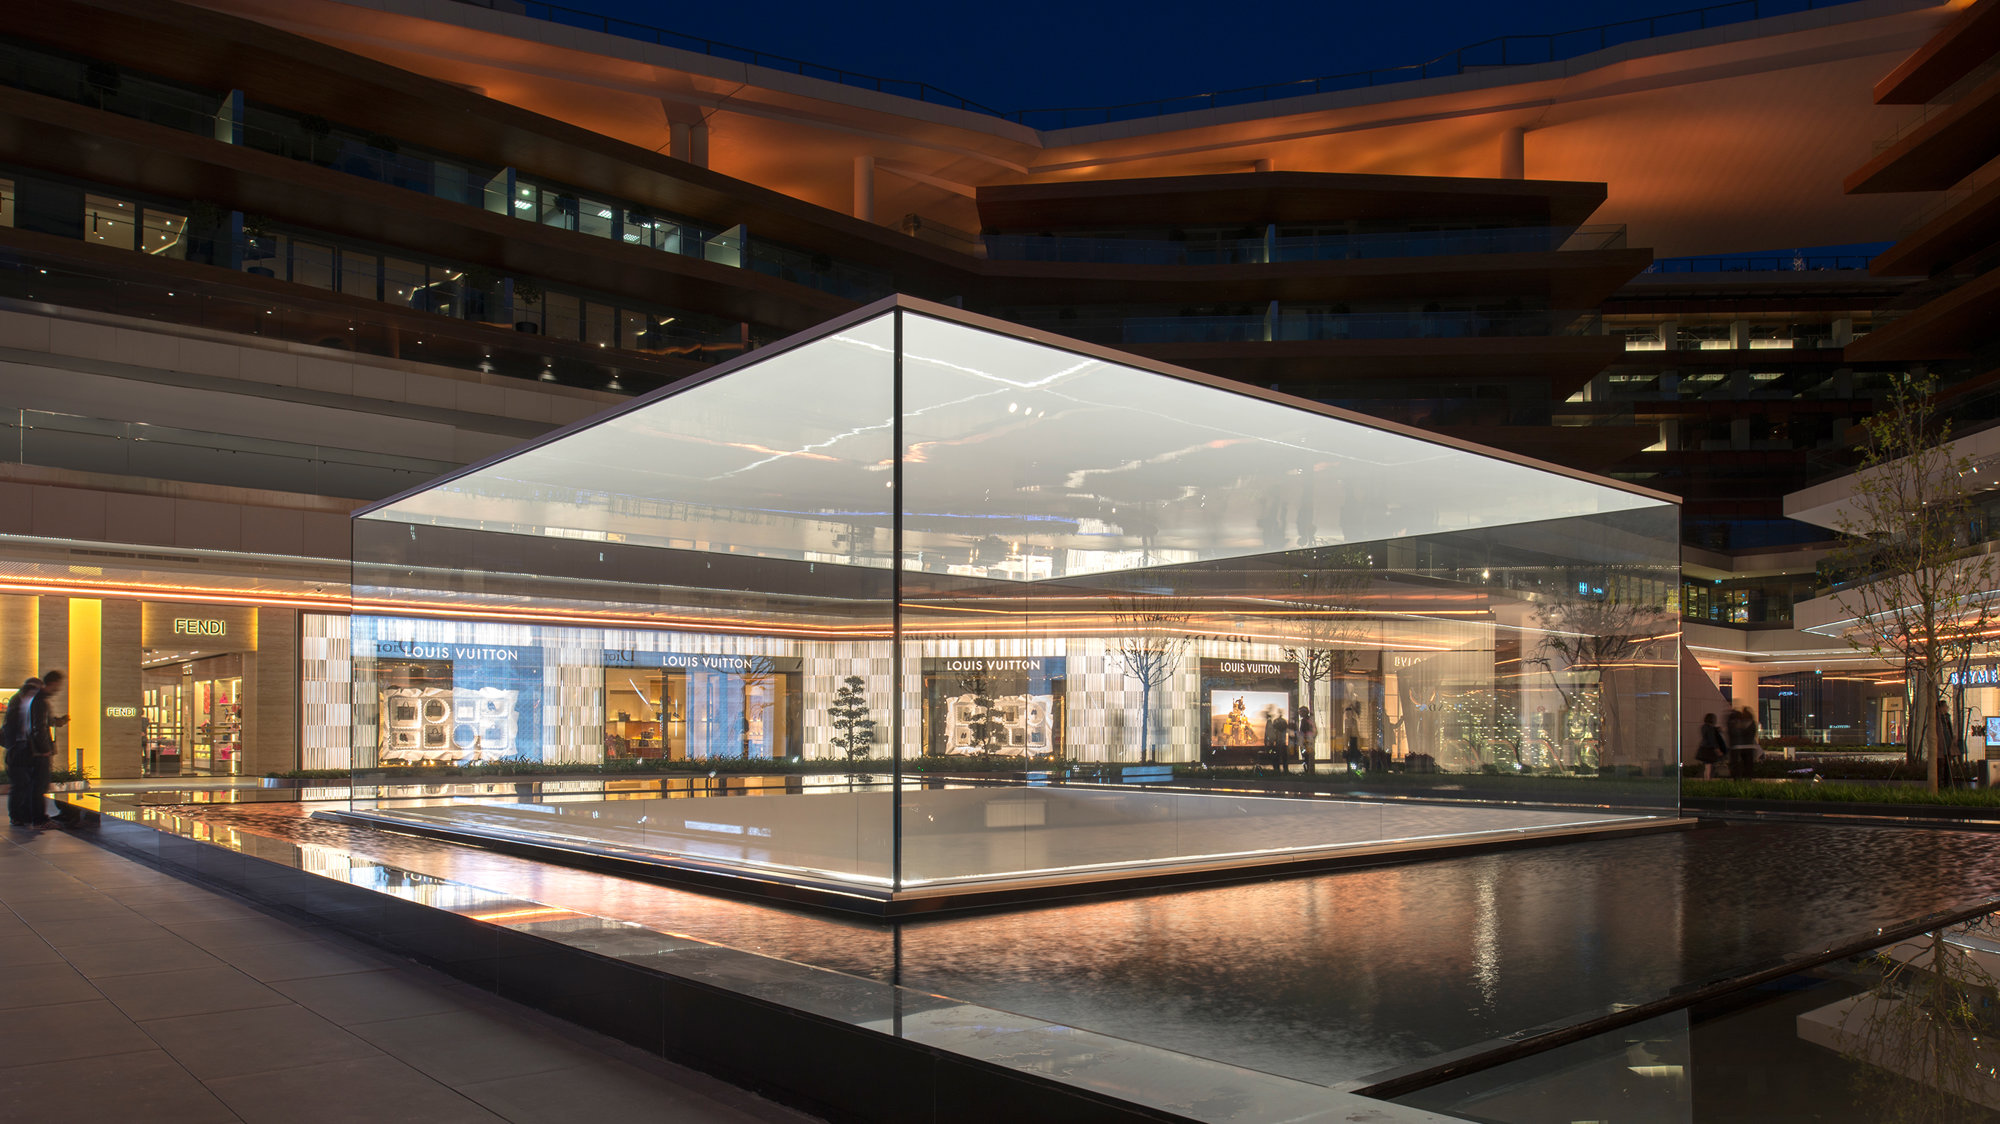 Louis Vuitton in Zorlu Center Istanbul